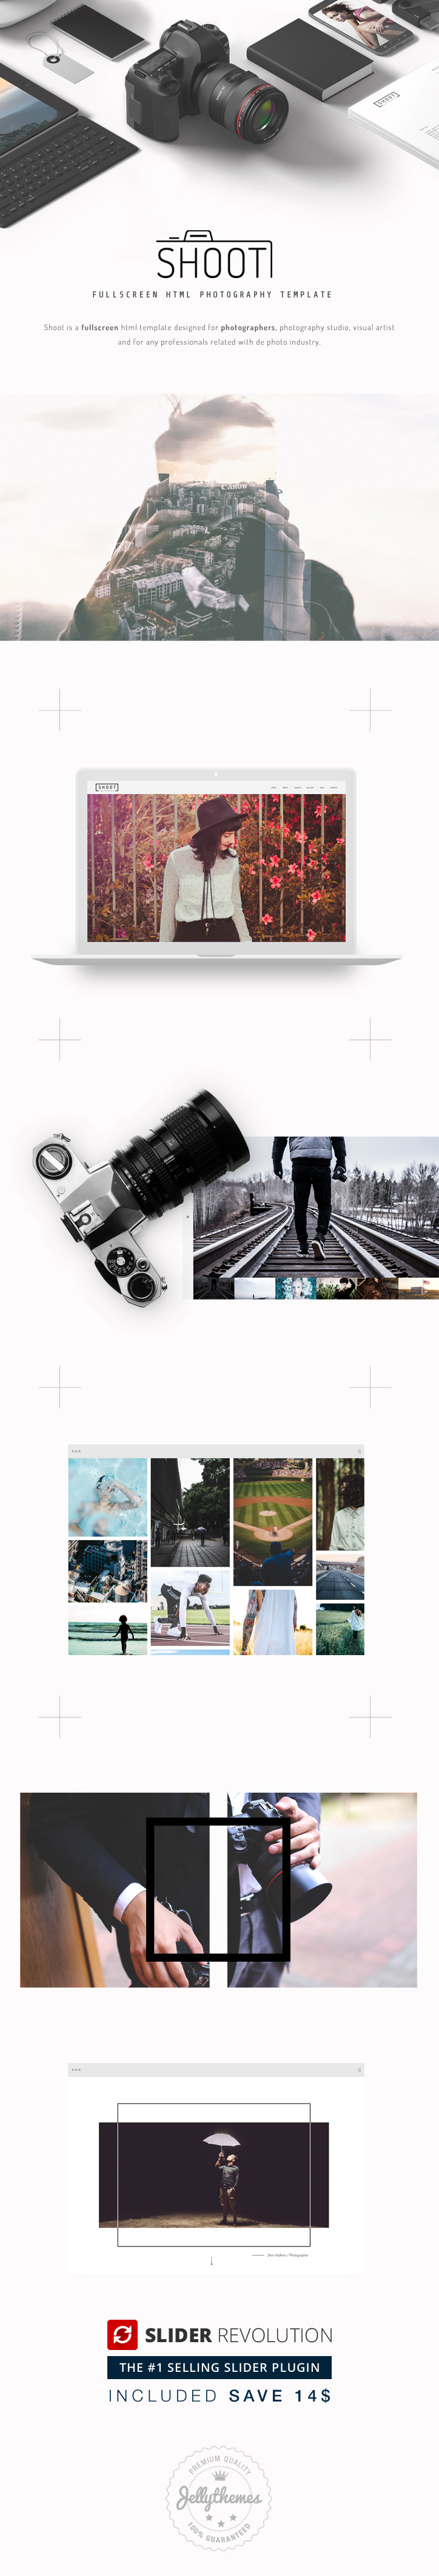 Shoot - Fullscreen Photography HTML Template - 1